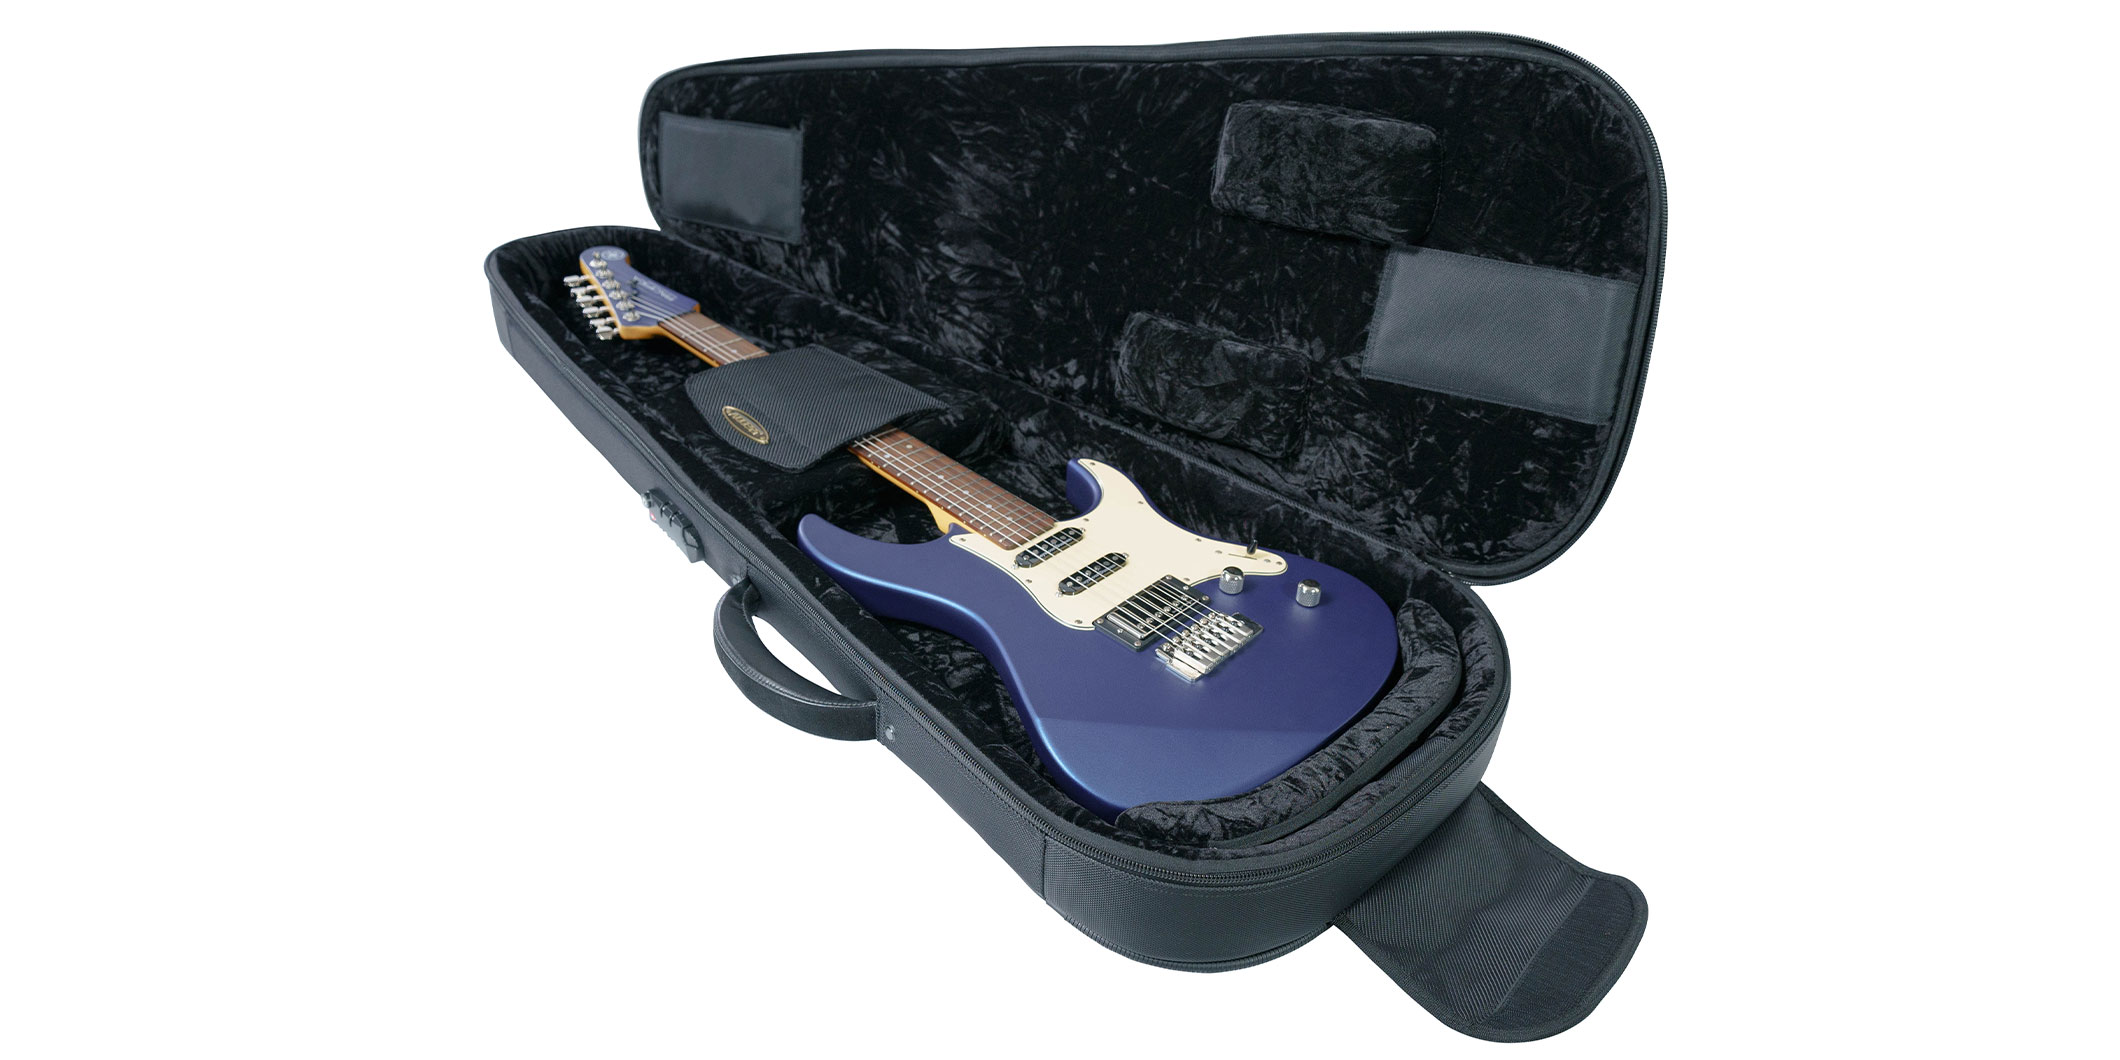 ACCESSより、高い保護性能と快適な運搬性、高級感を実現したプレミアムなギター用ギグバッグが登場